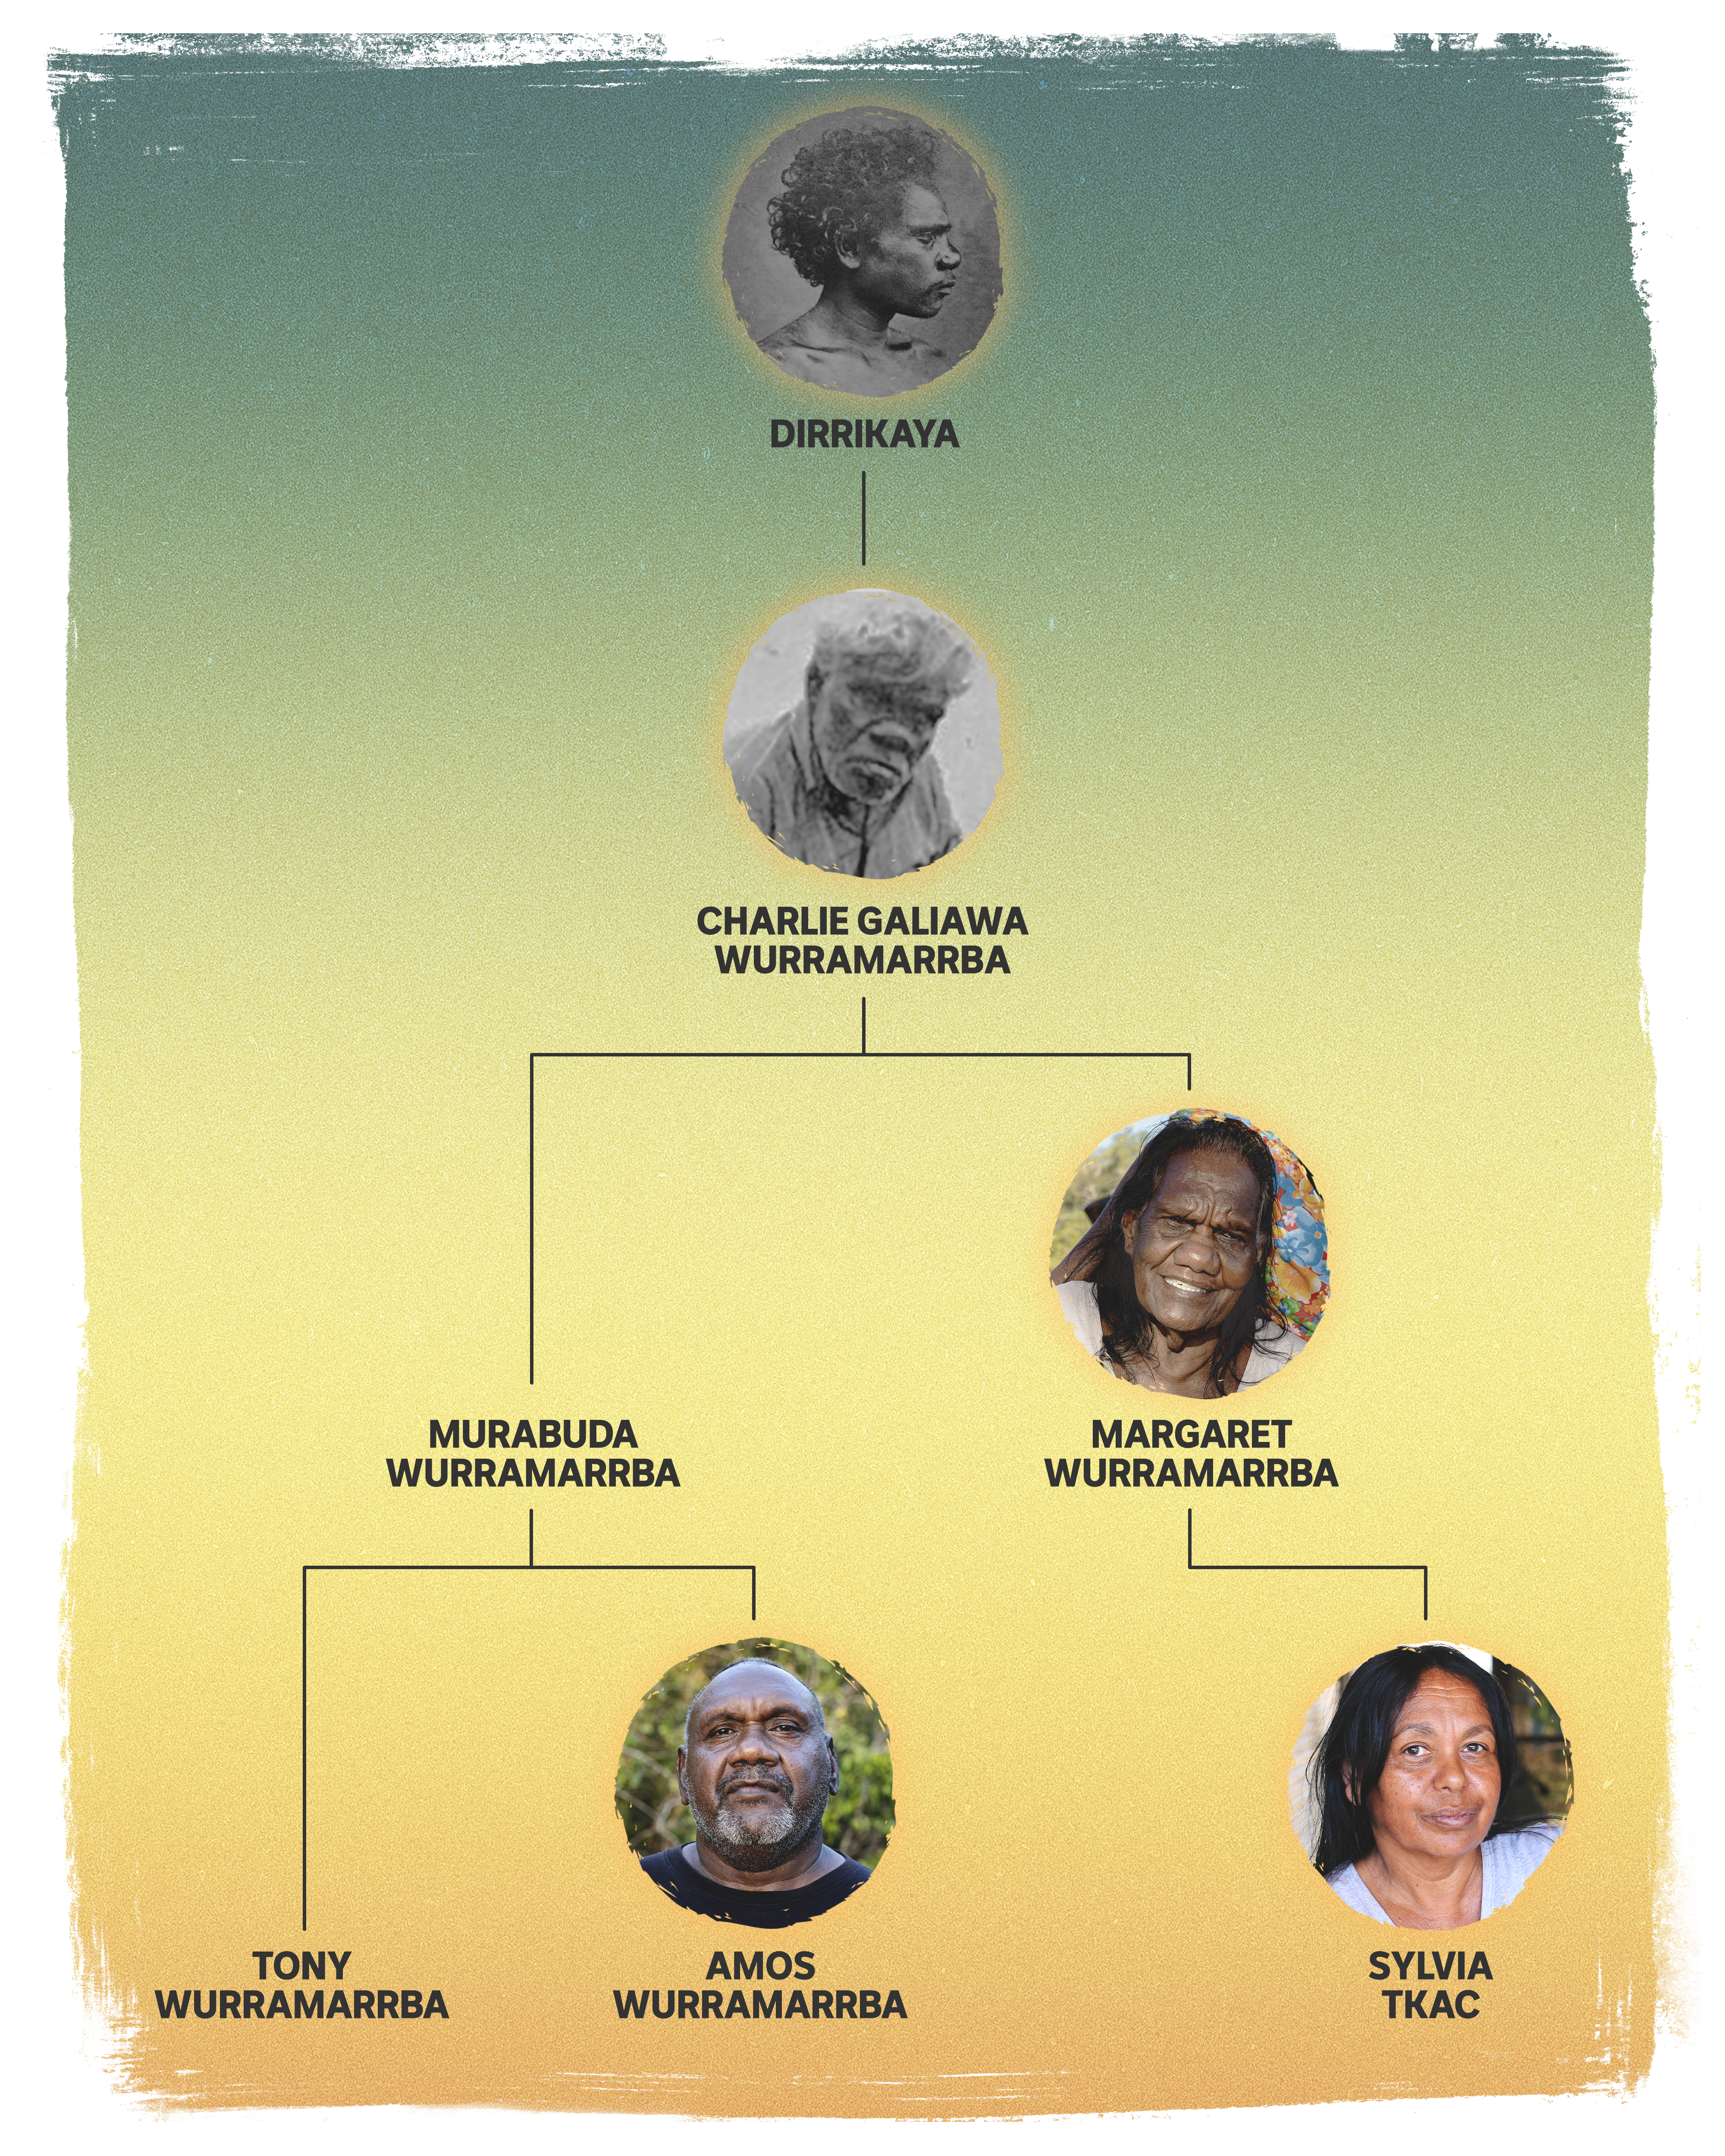 An illustration of Dirrikaya's family tree with Dirrikaya on top